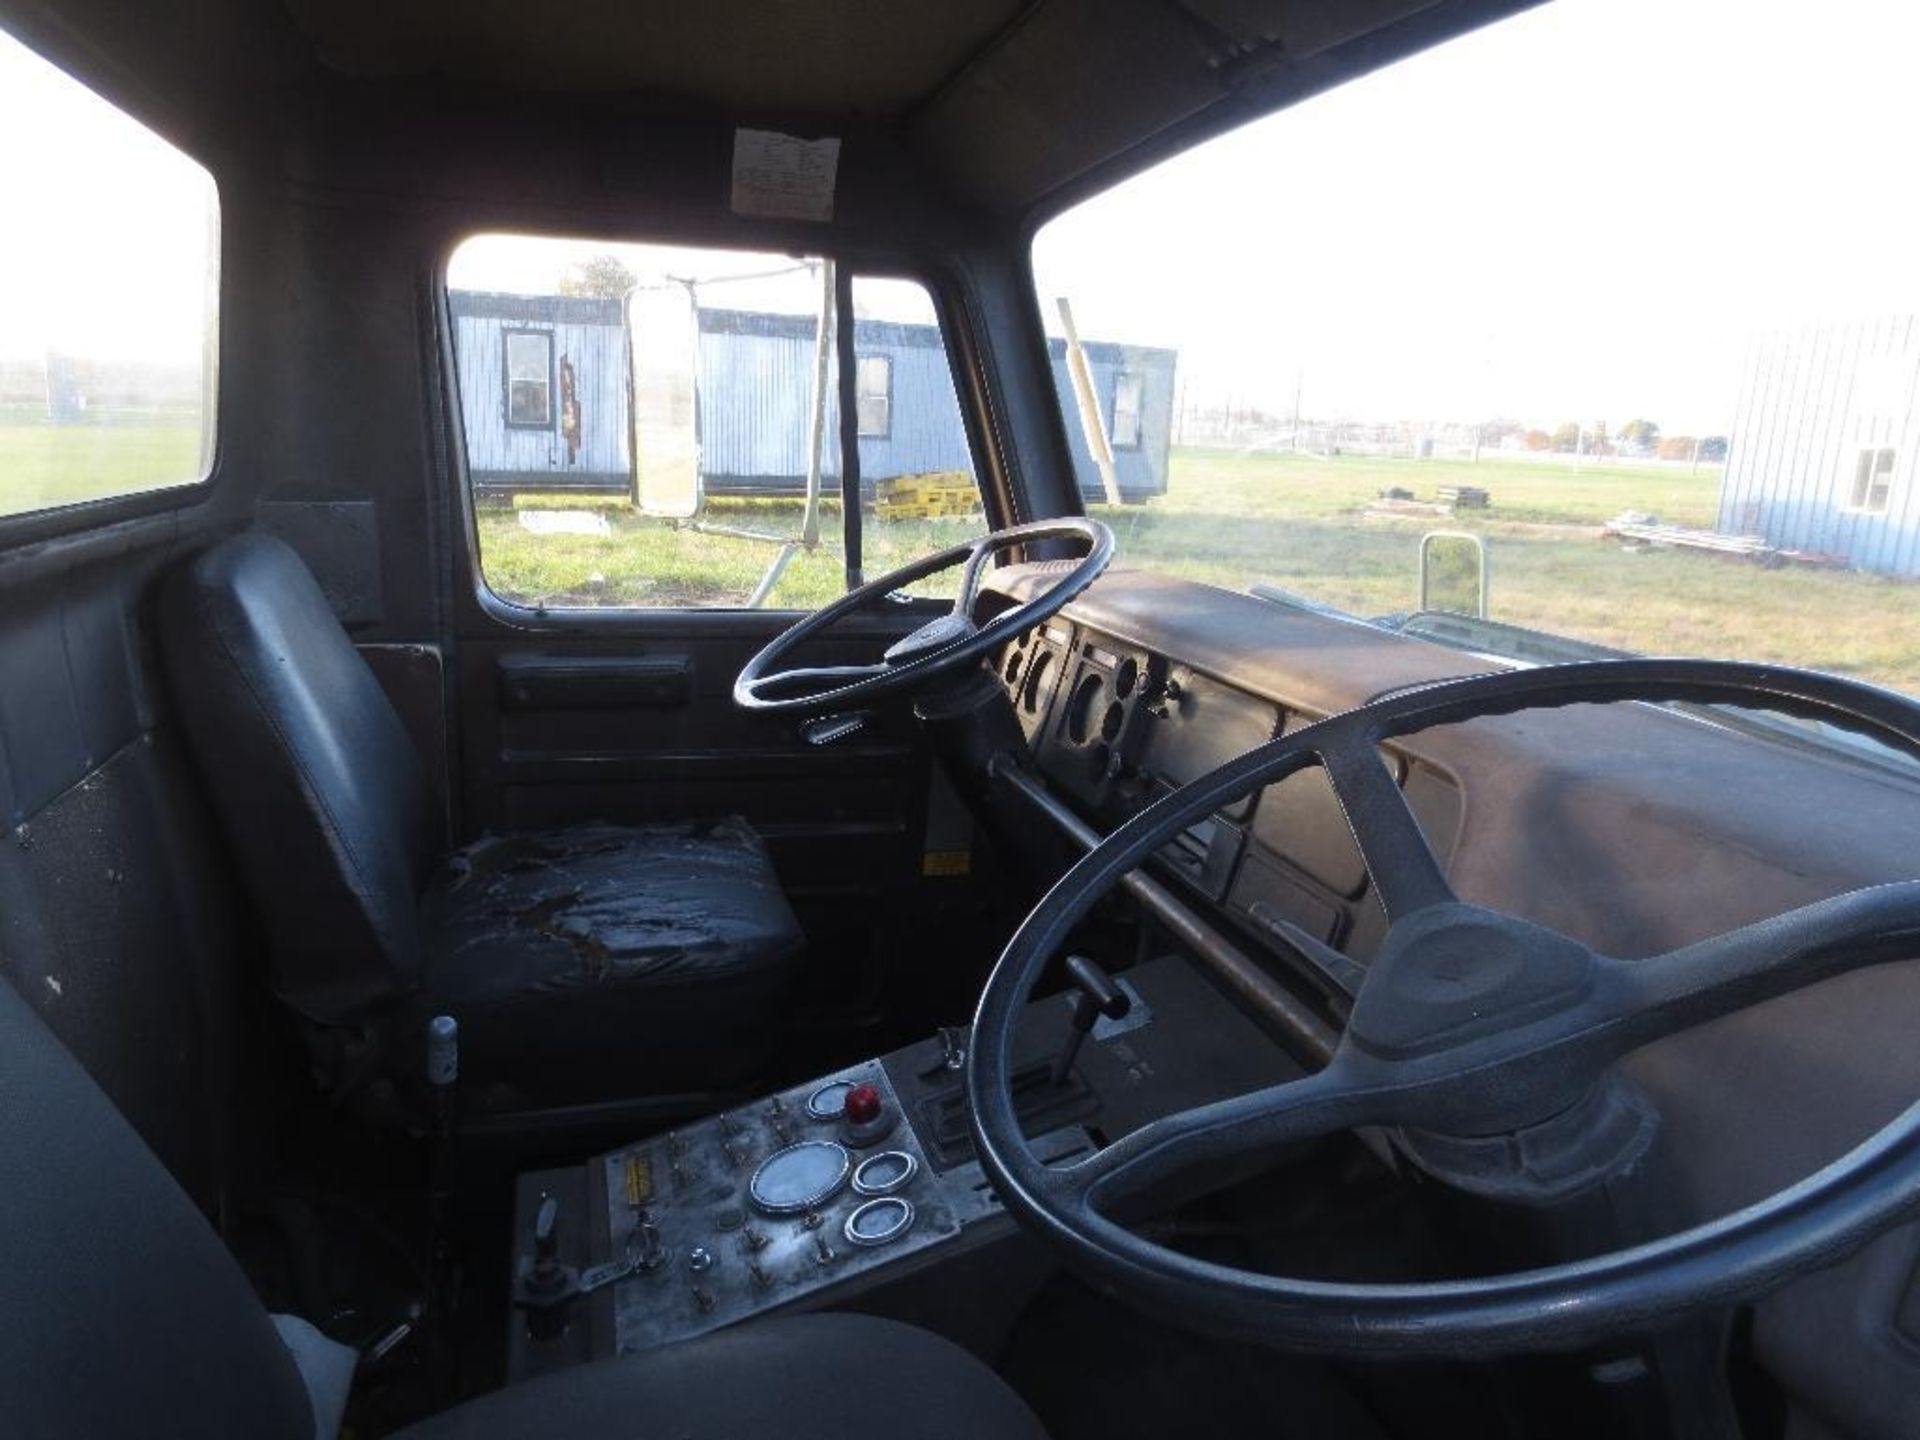 Navistar International Vac/Sweeper Truck, 1988, Vin # 1HTLAZPM1KH540973 Condition Unknown - Image 15 of 28